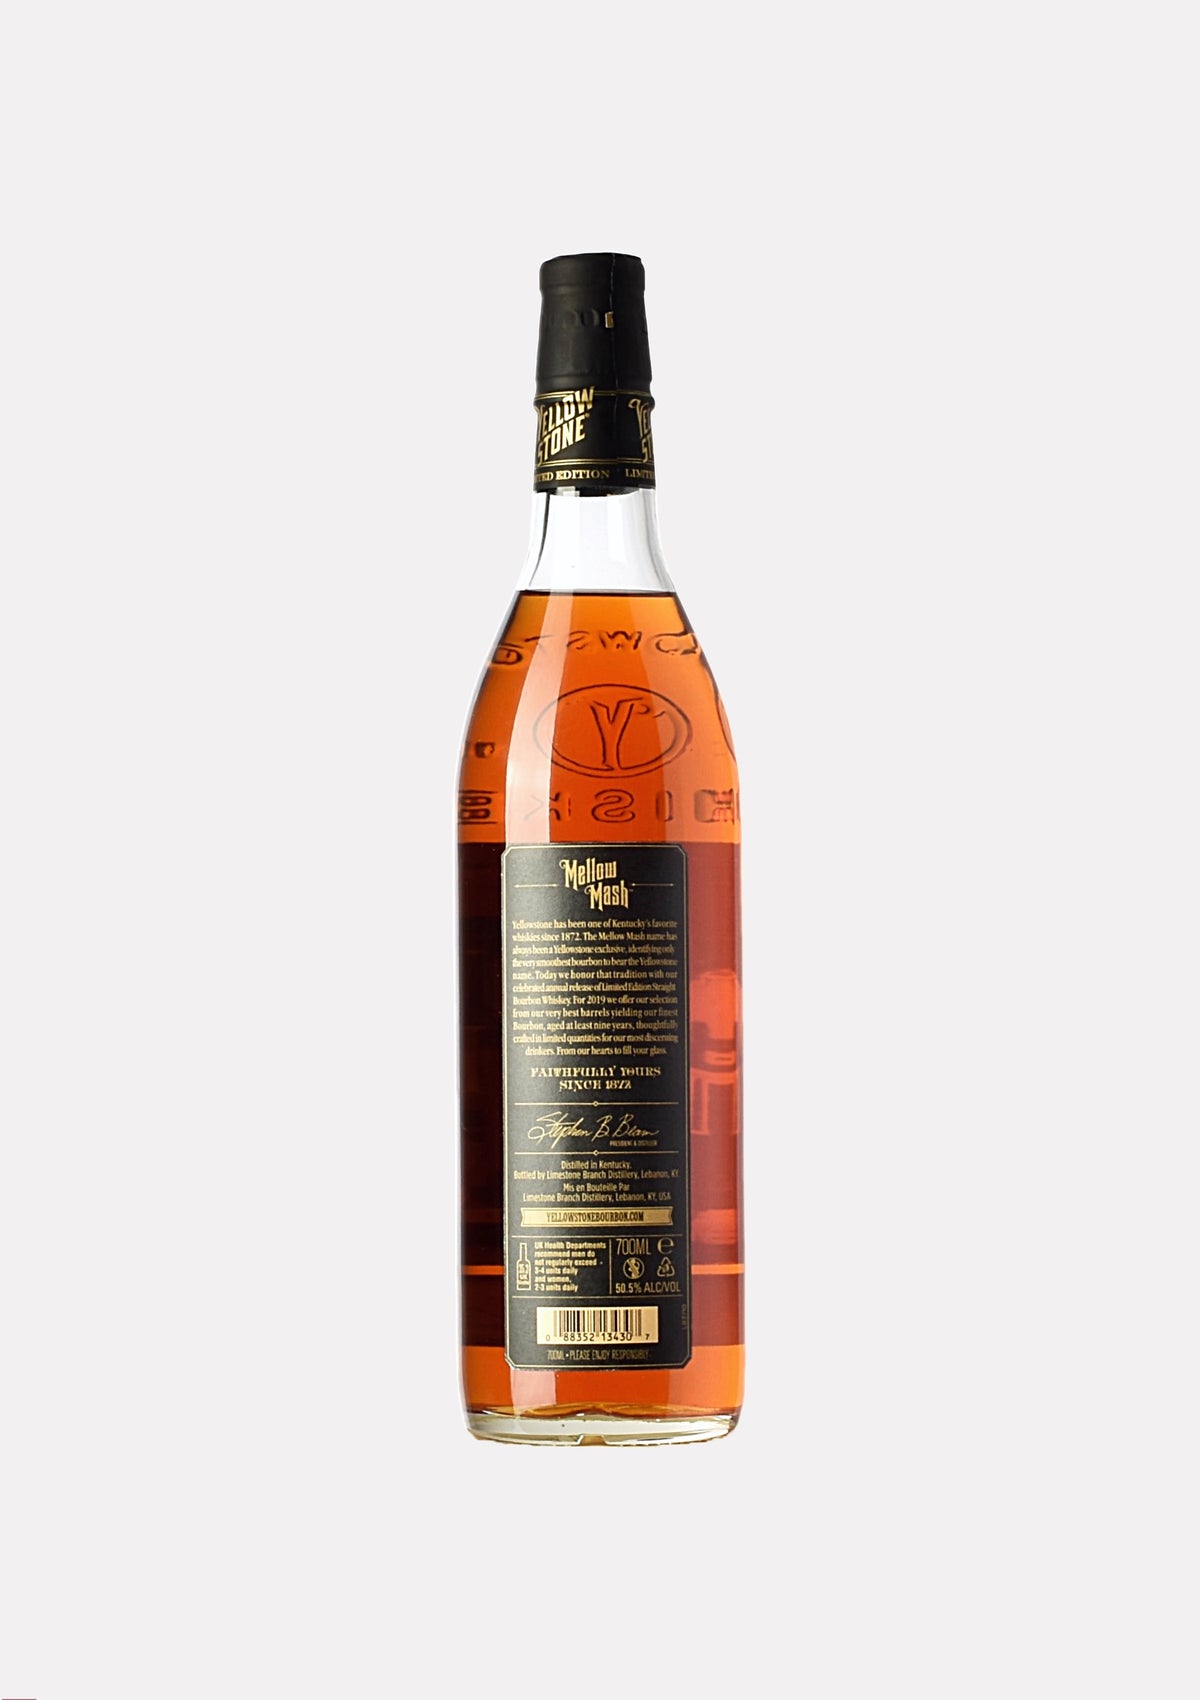 Yellowstone Limited Edition 2019 Kentucky Straight Bourbon Whiskey 9 Jahre BN: 04680